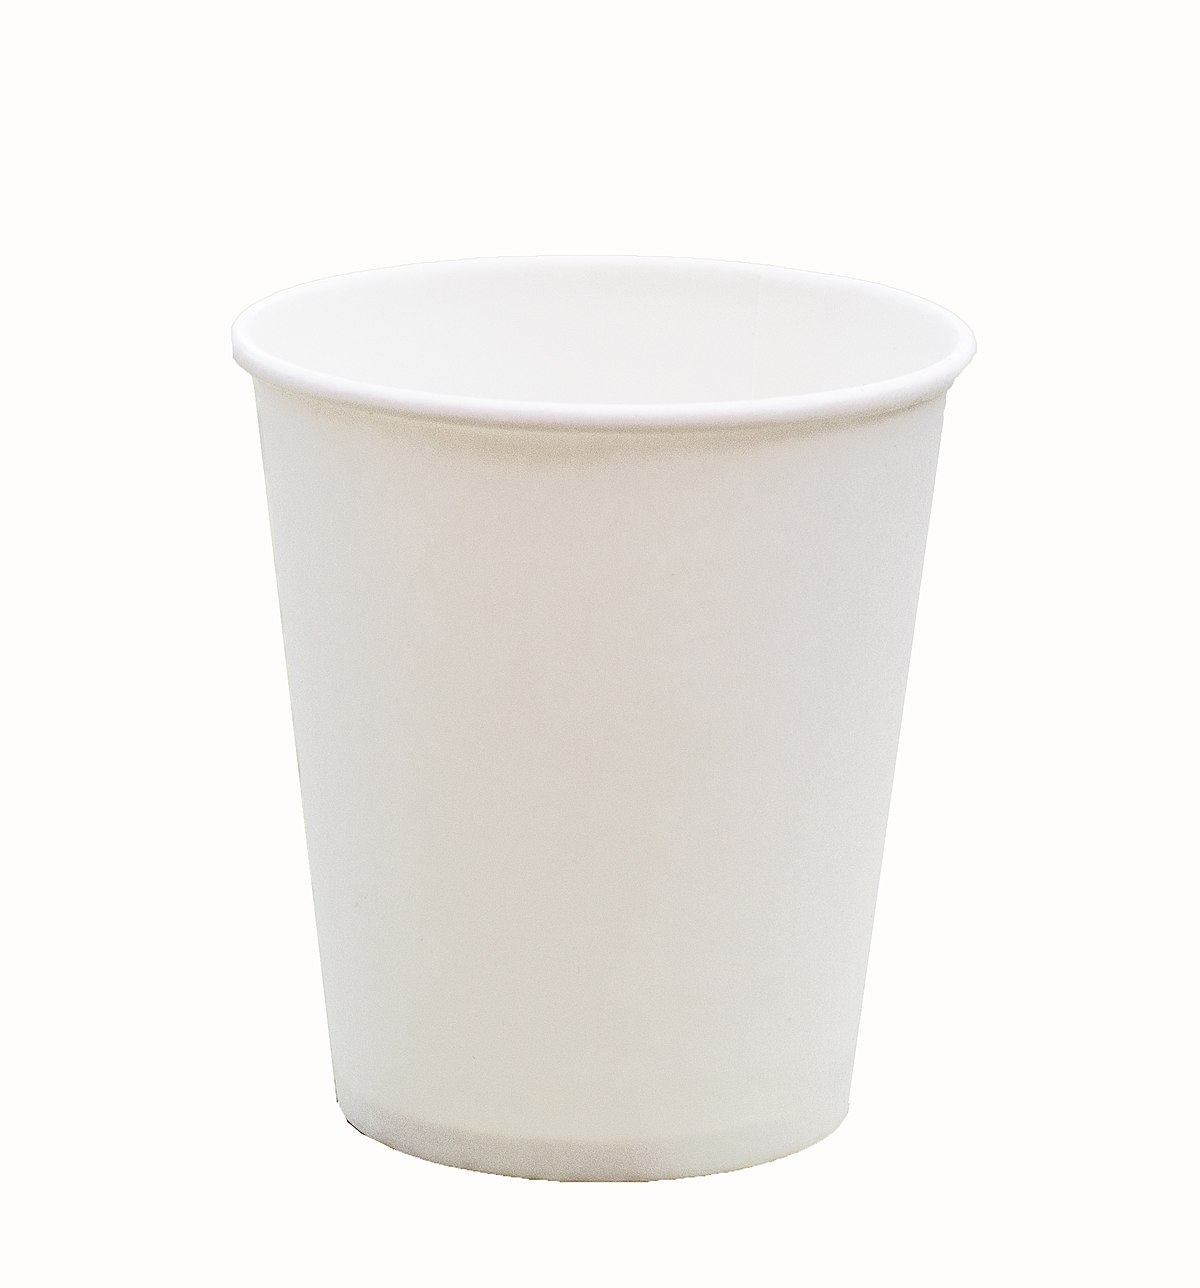 5 oz Square Black Plastic Cafe Cup - 2 1/2 x 2 1/2 x 2